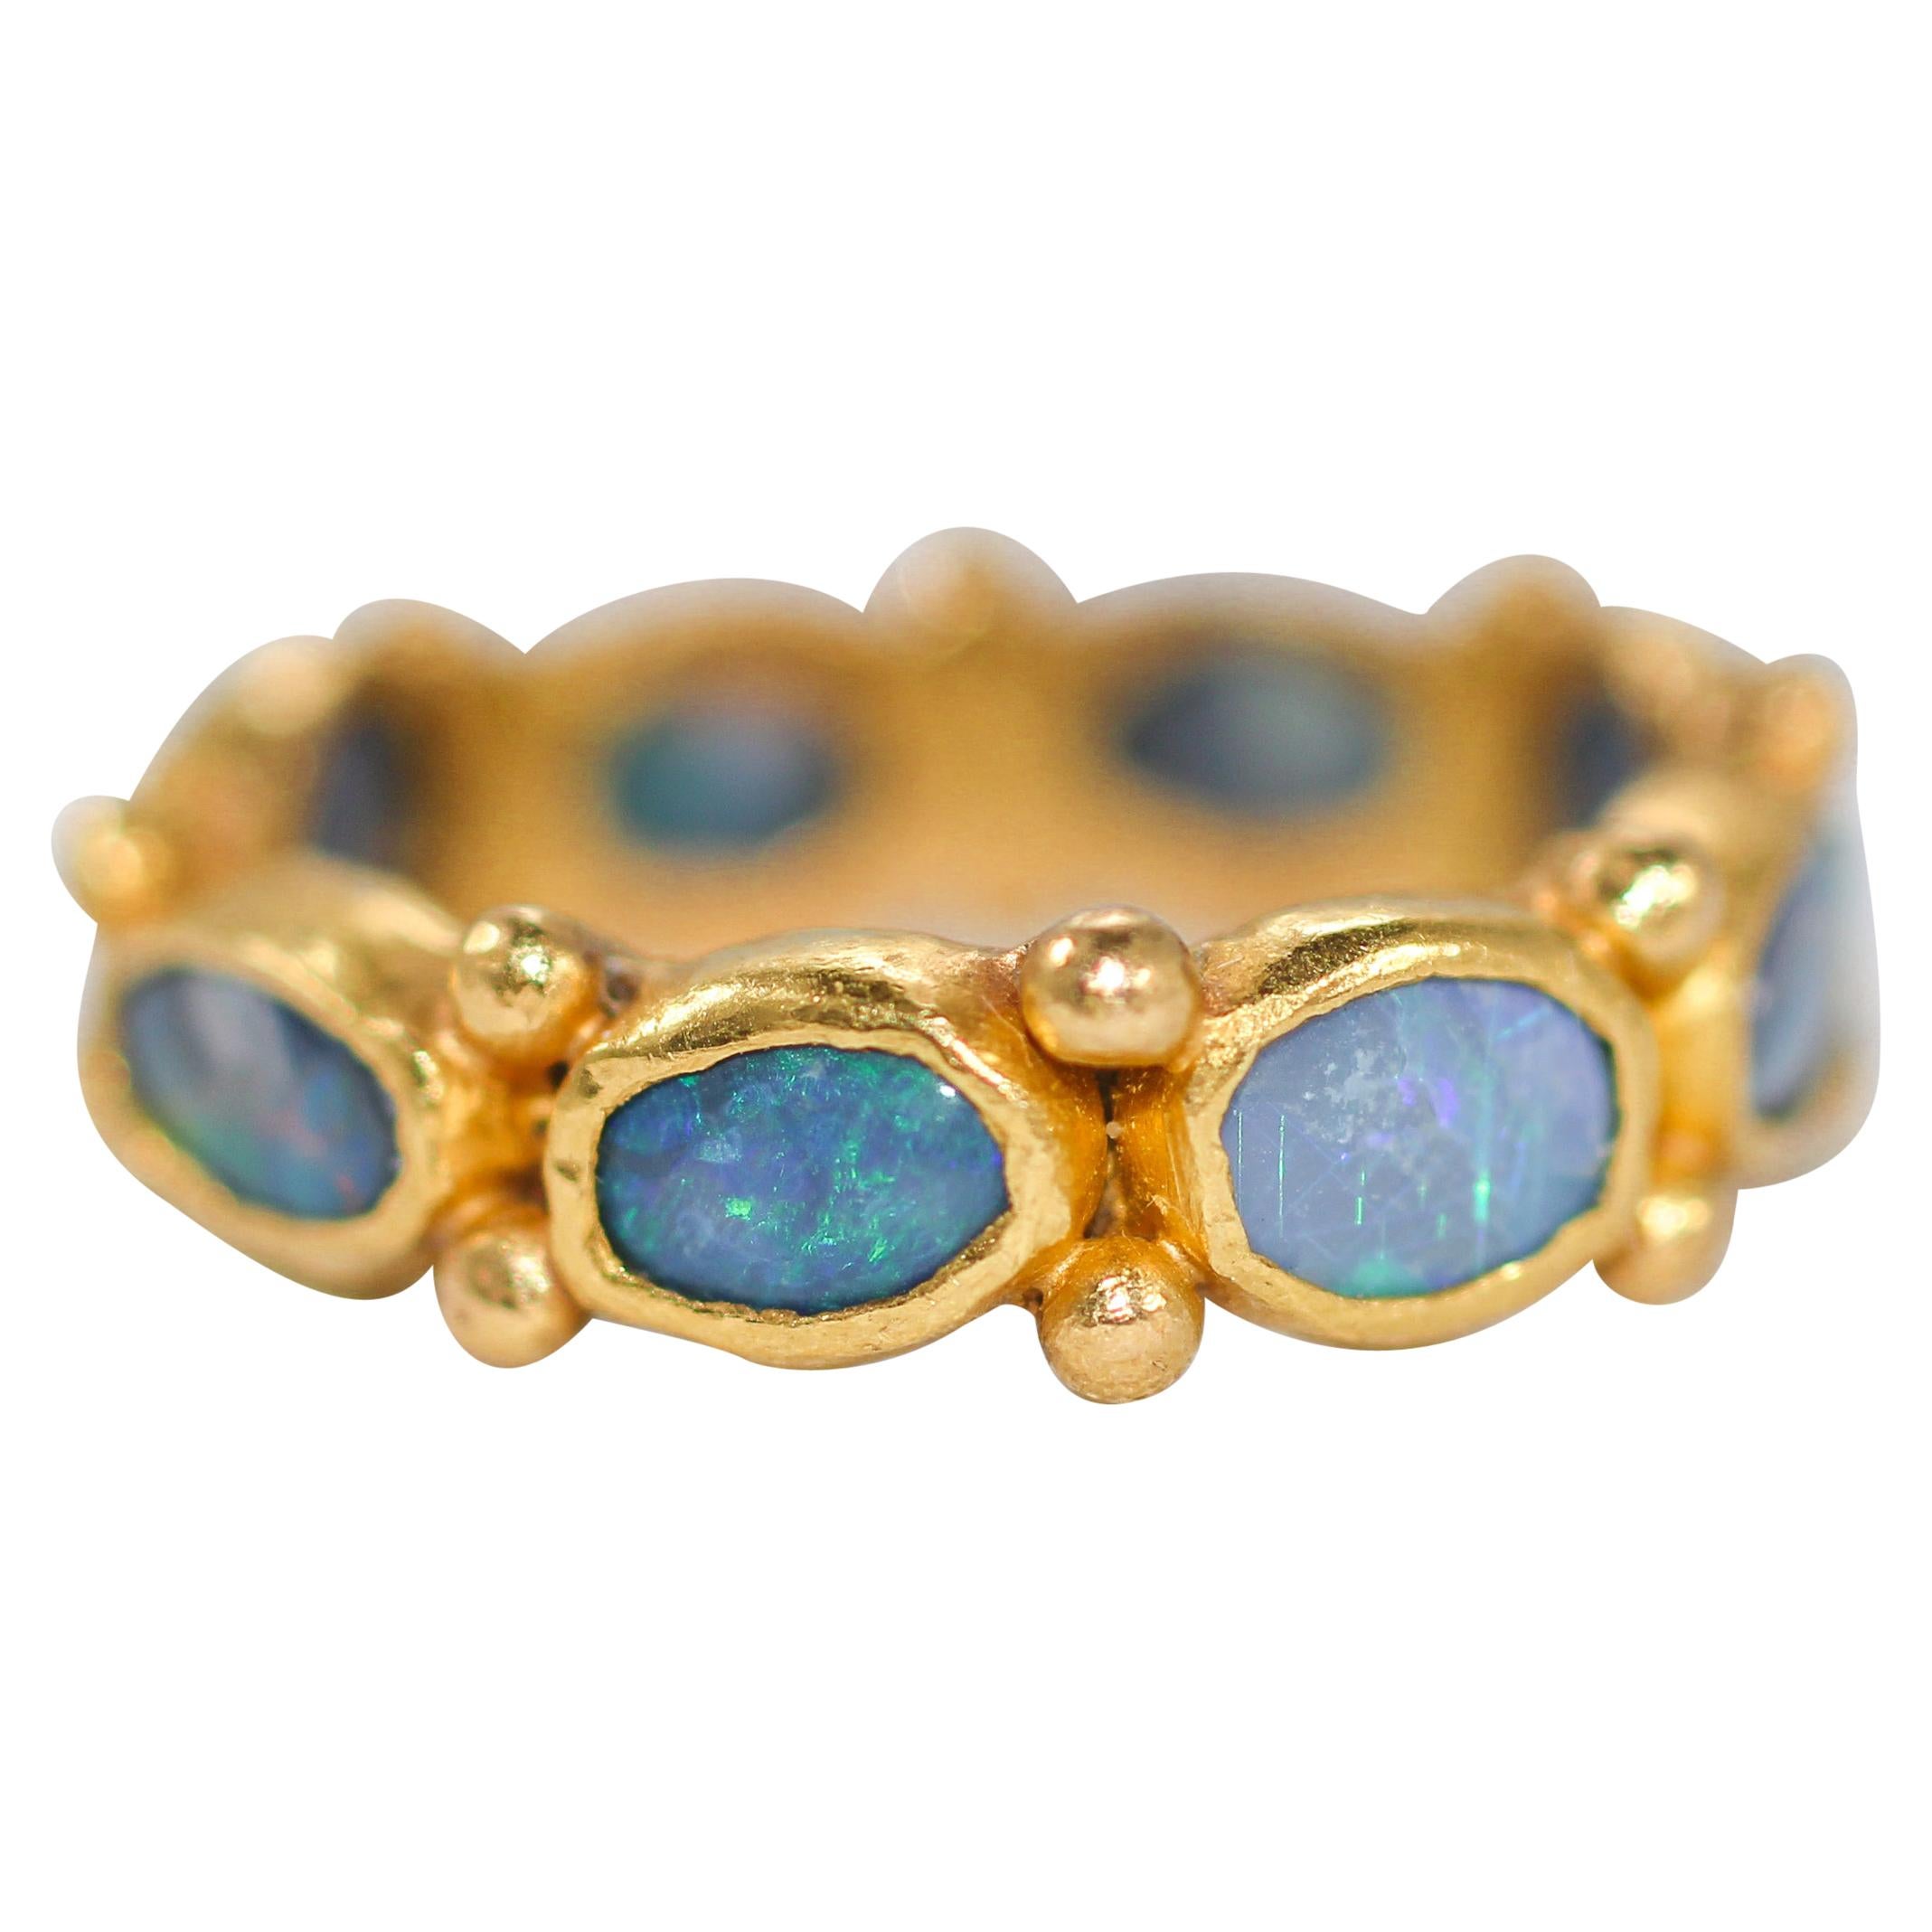 Black Opal 22 Karat Gold Bezel Band Fashion Ring One of a Kind Handmade Jewelry